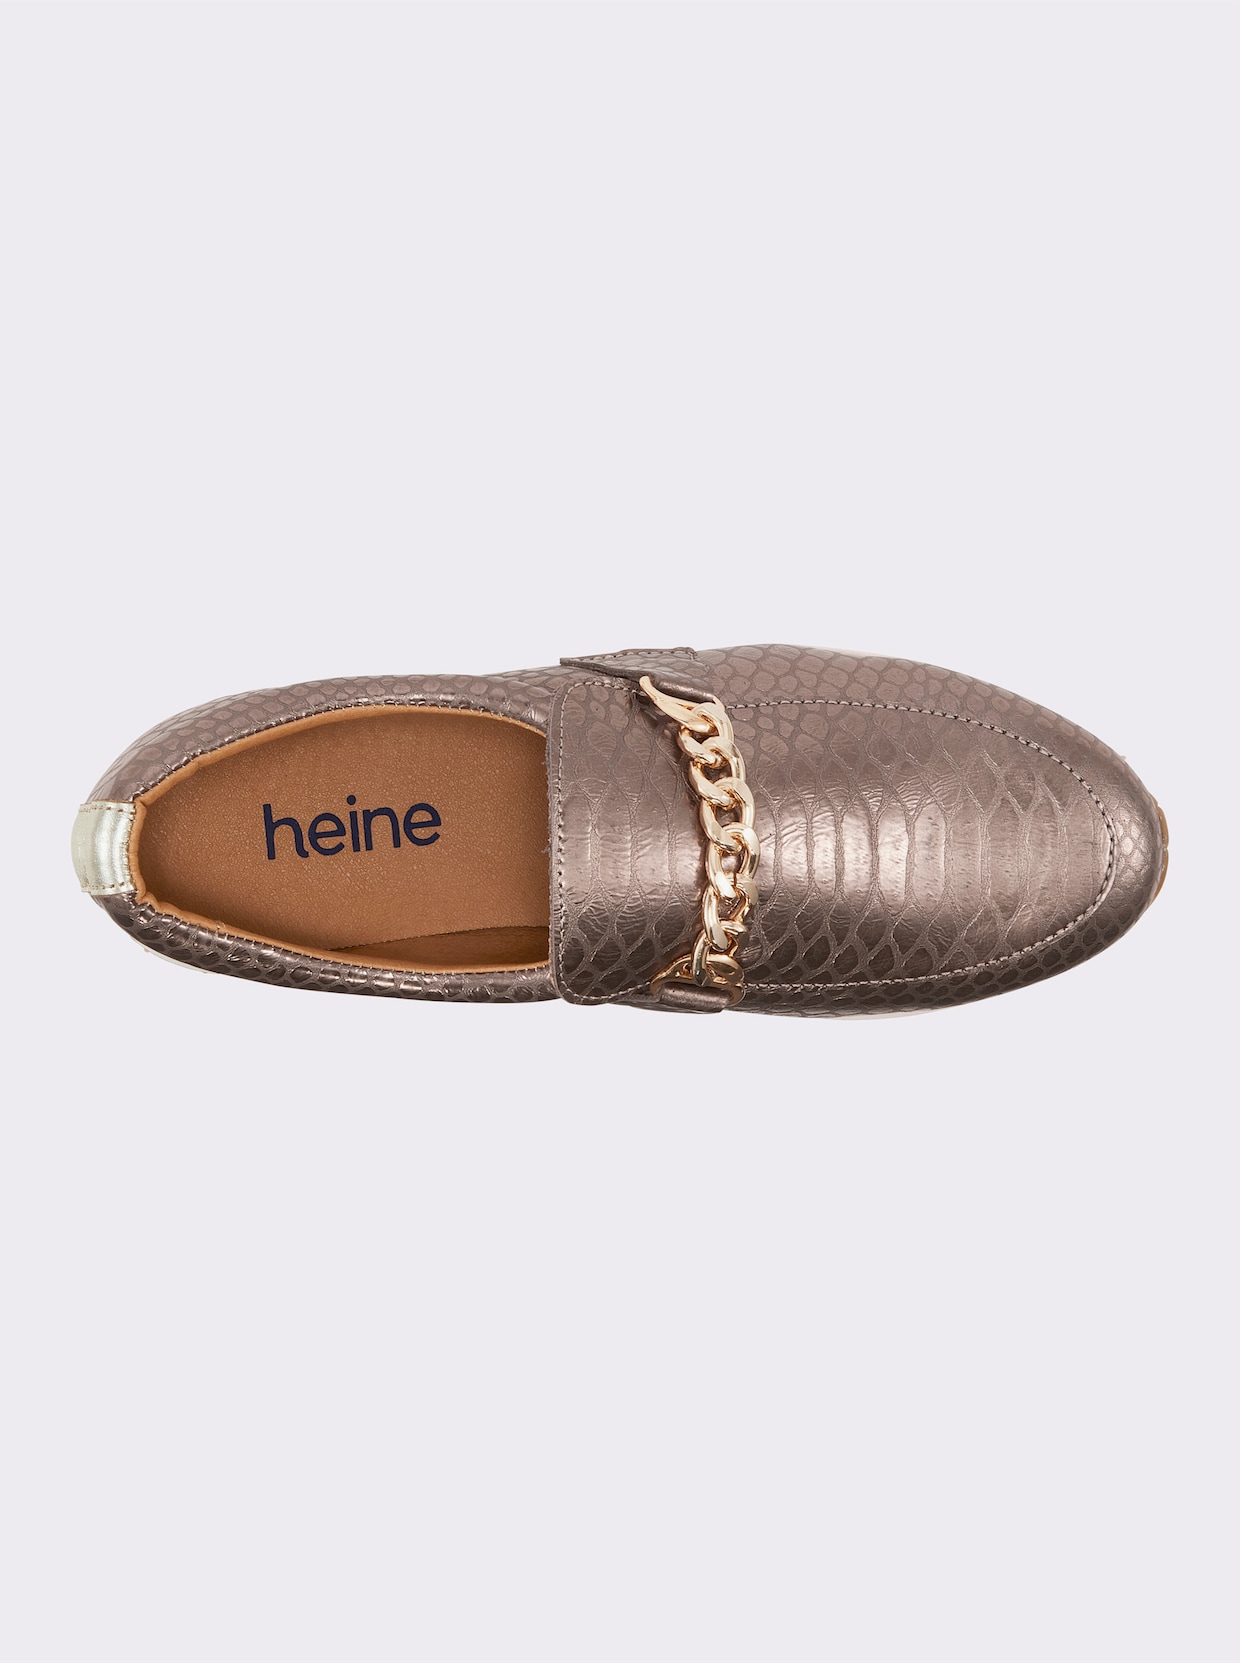 heine instapper - kaki-metallic